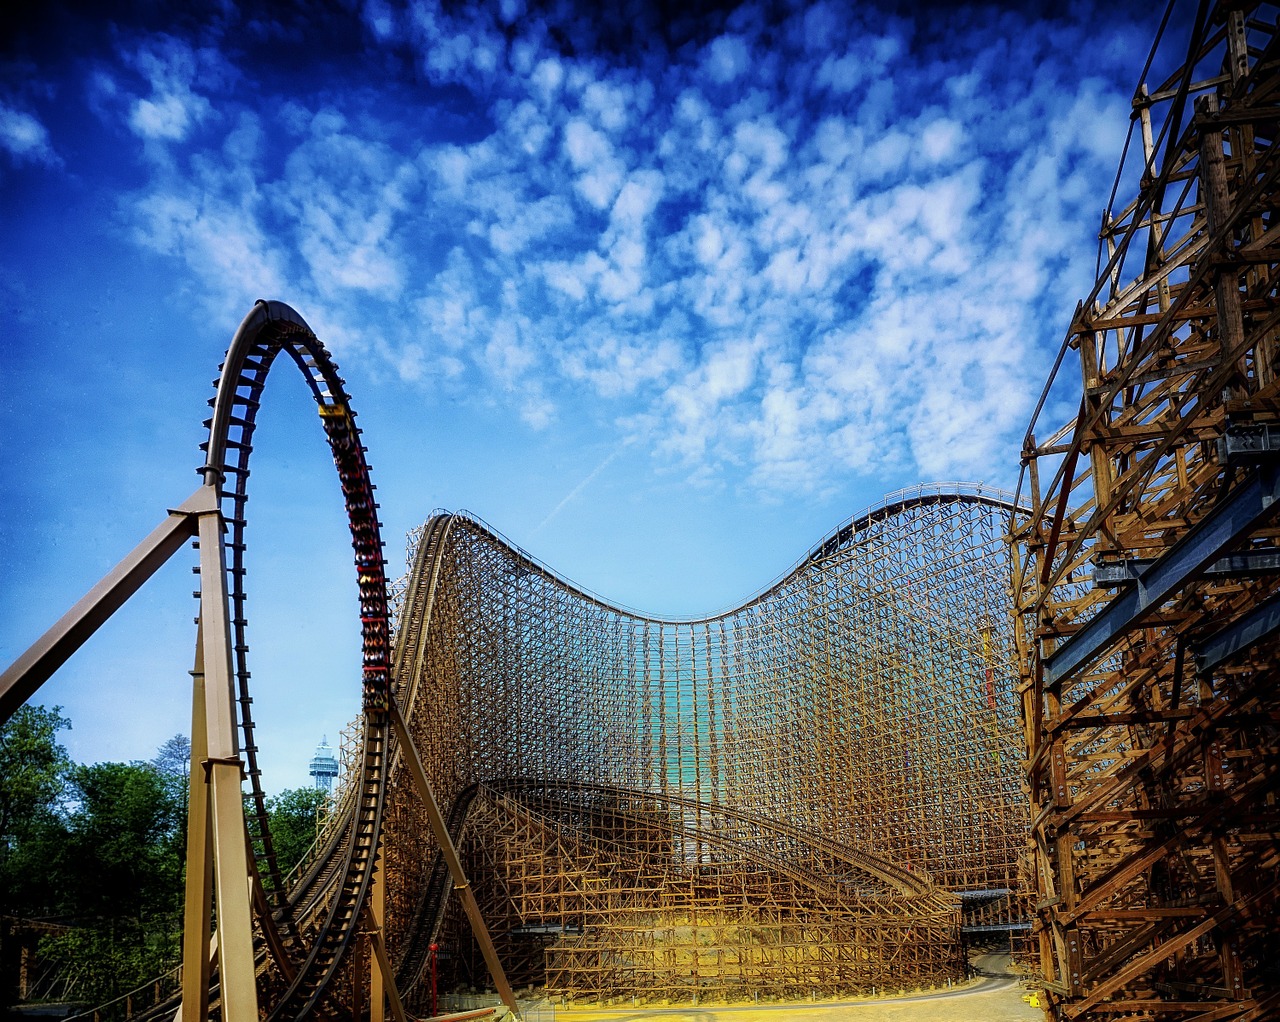 king's island ohio roller coaster free photo